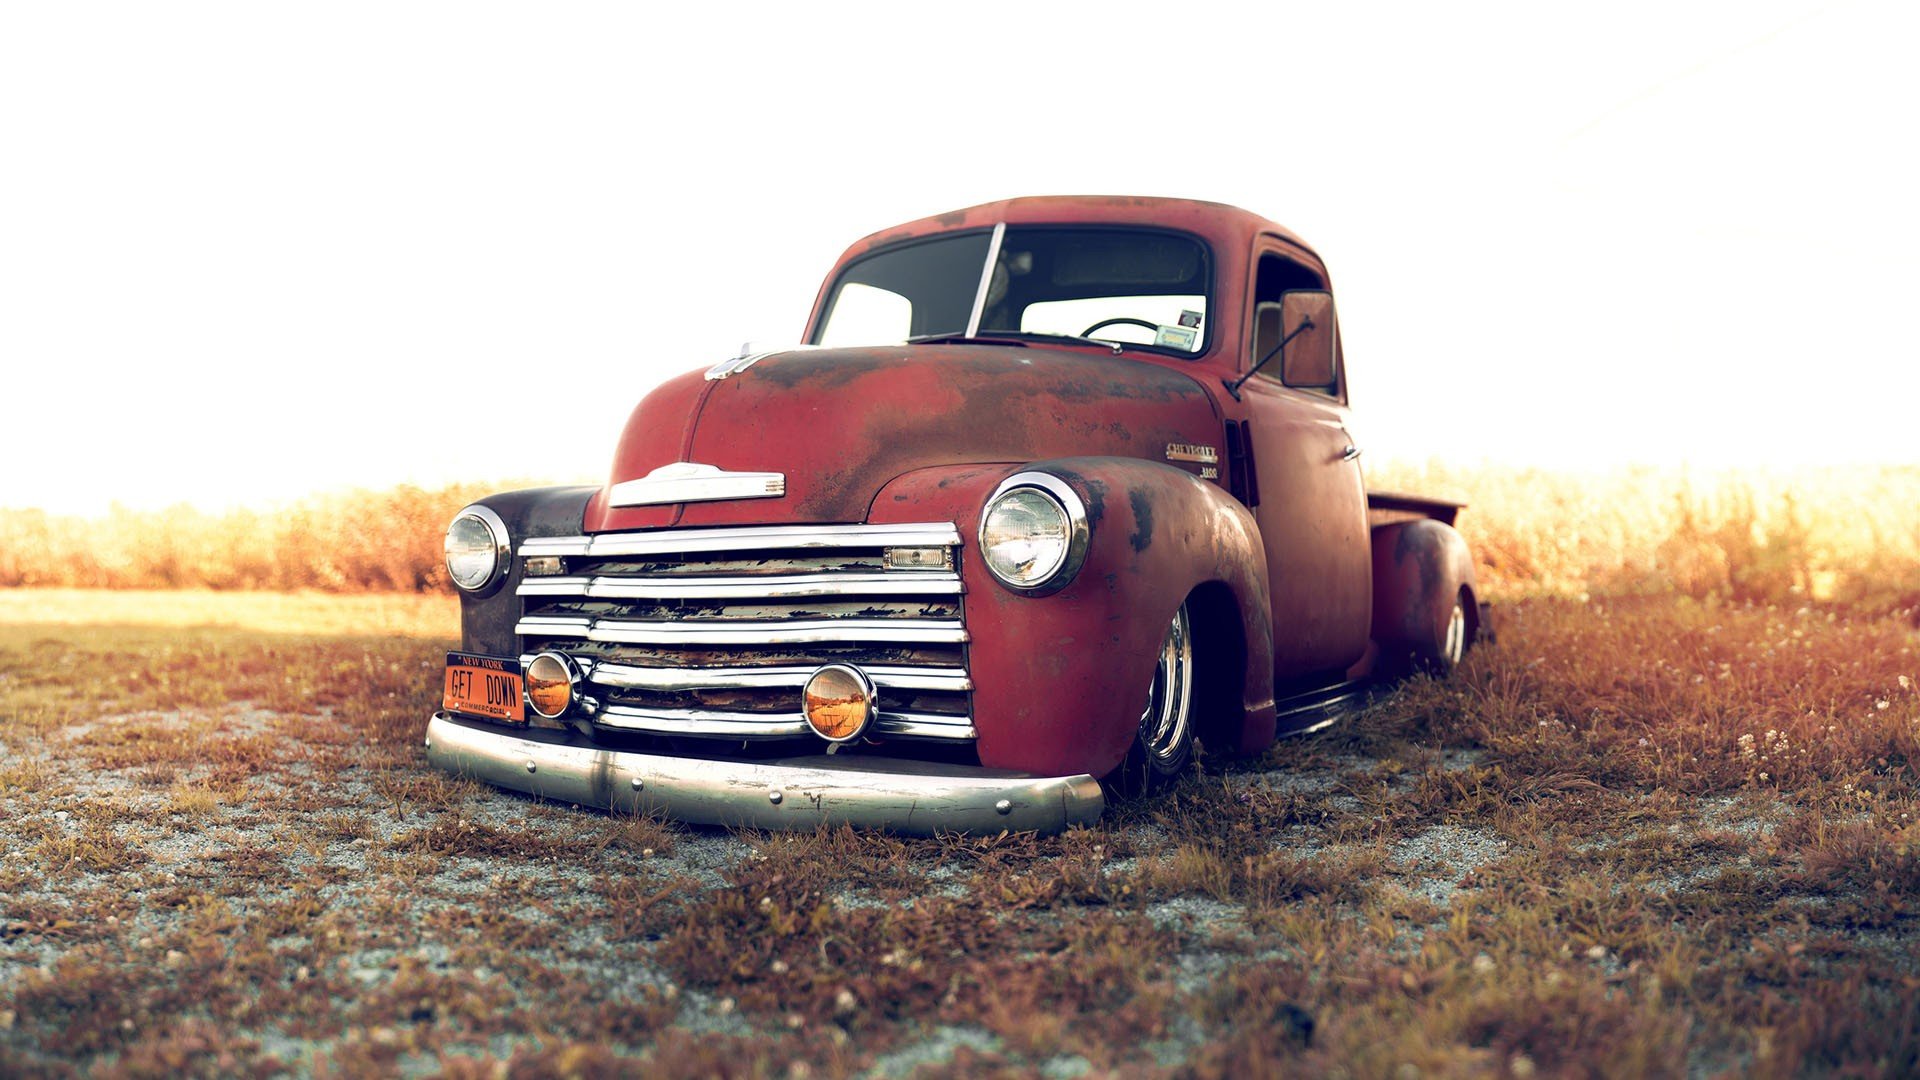 42 Chevy Truck Wallpaper Desktop On Wallpapersafari